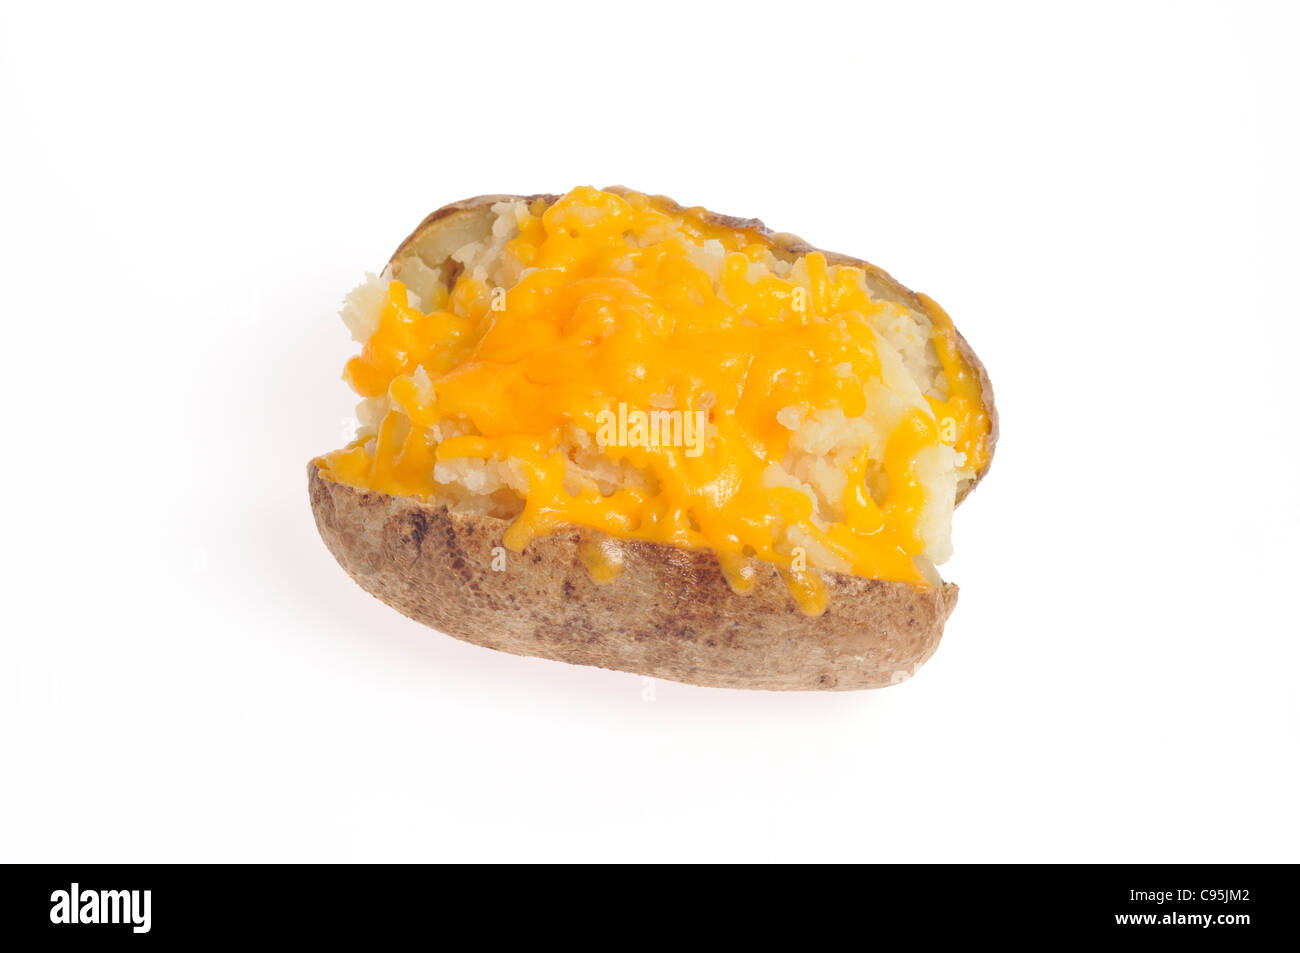 Baked potato topped with orange cheese on white background cutout. Stock Photo